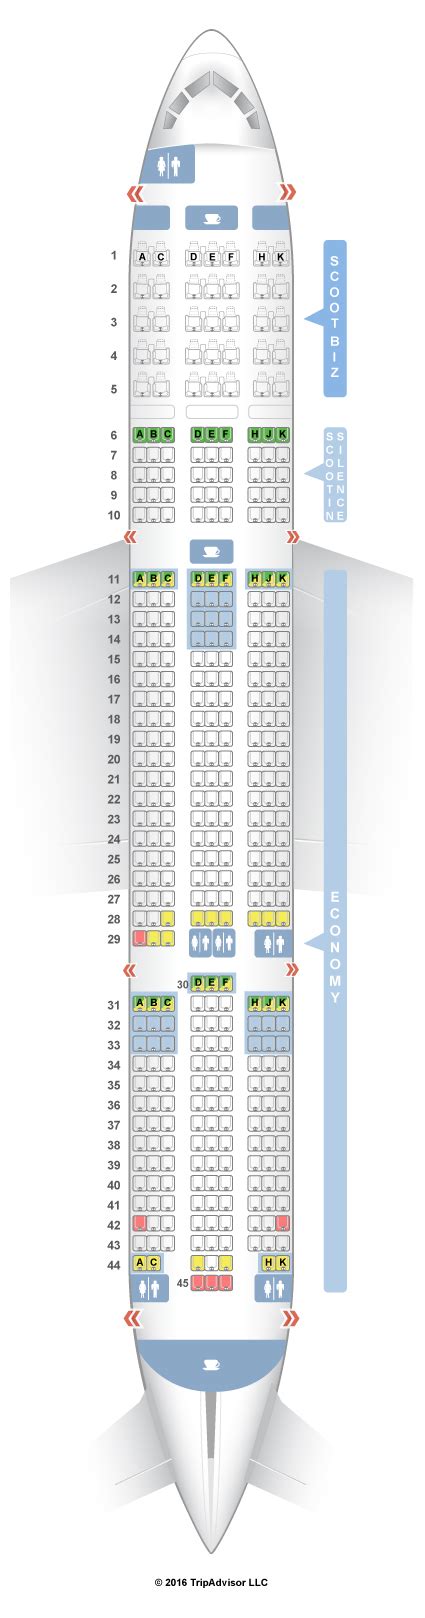 Seatguru Seat Map Scoot Airlines Boeing 787 900 789